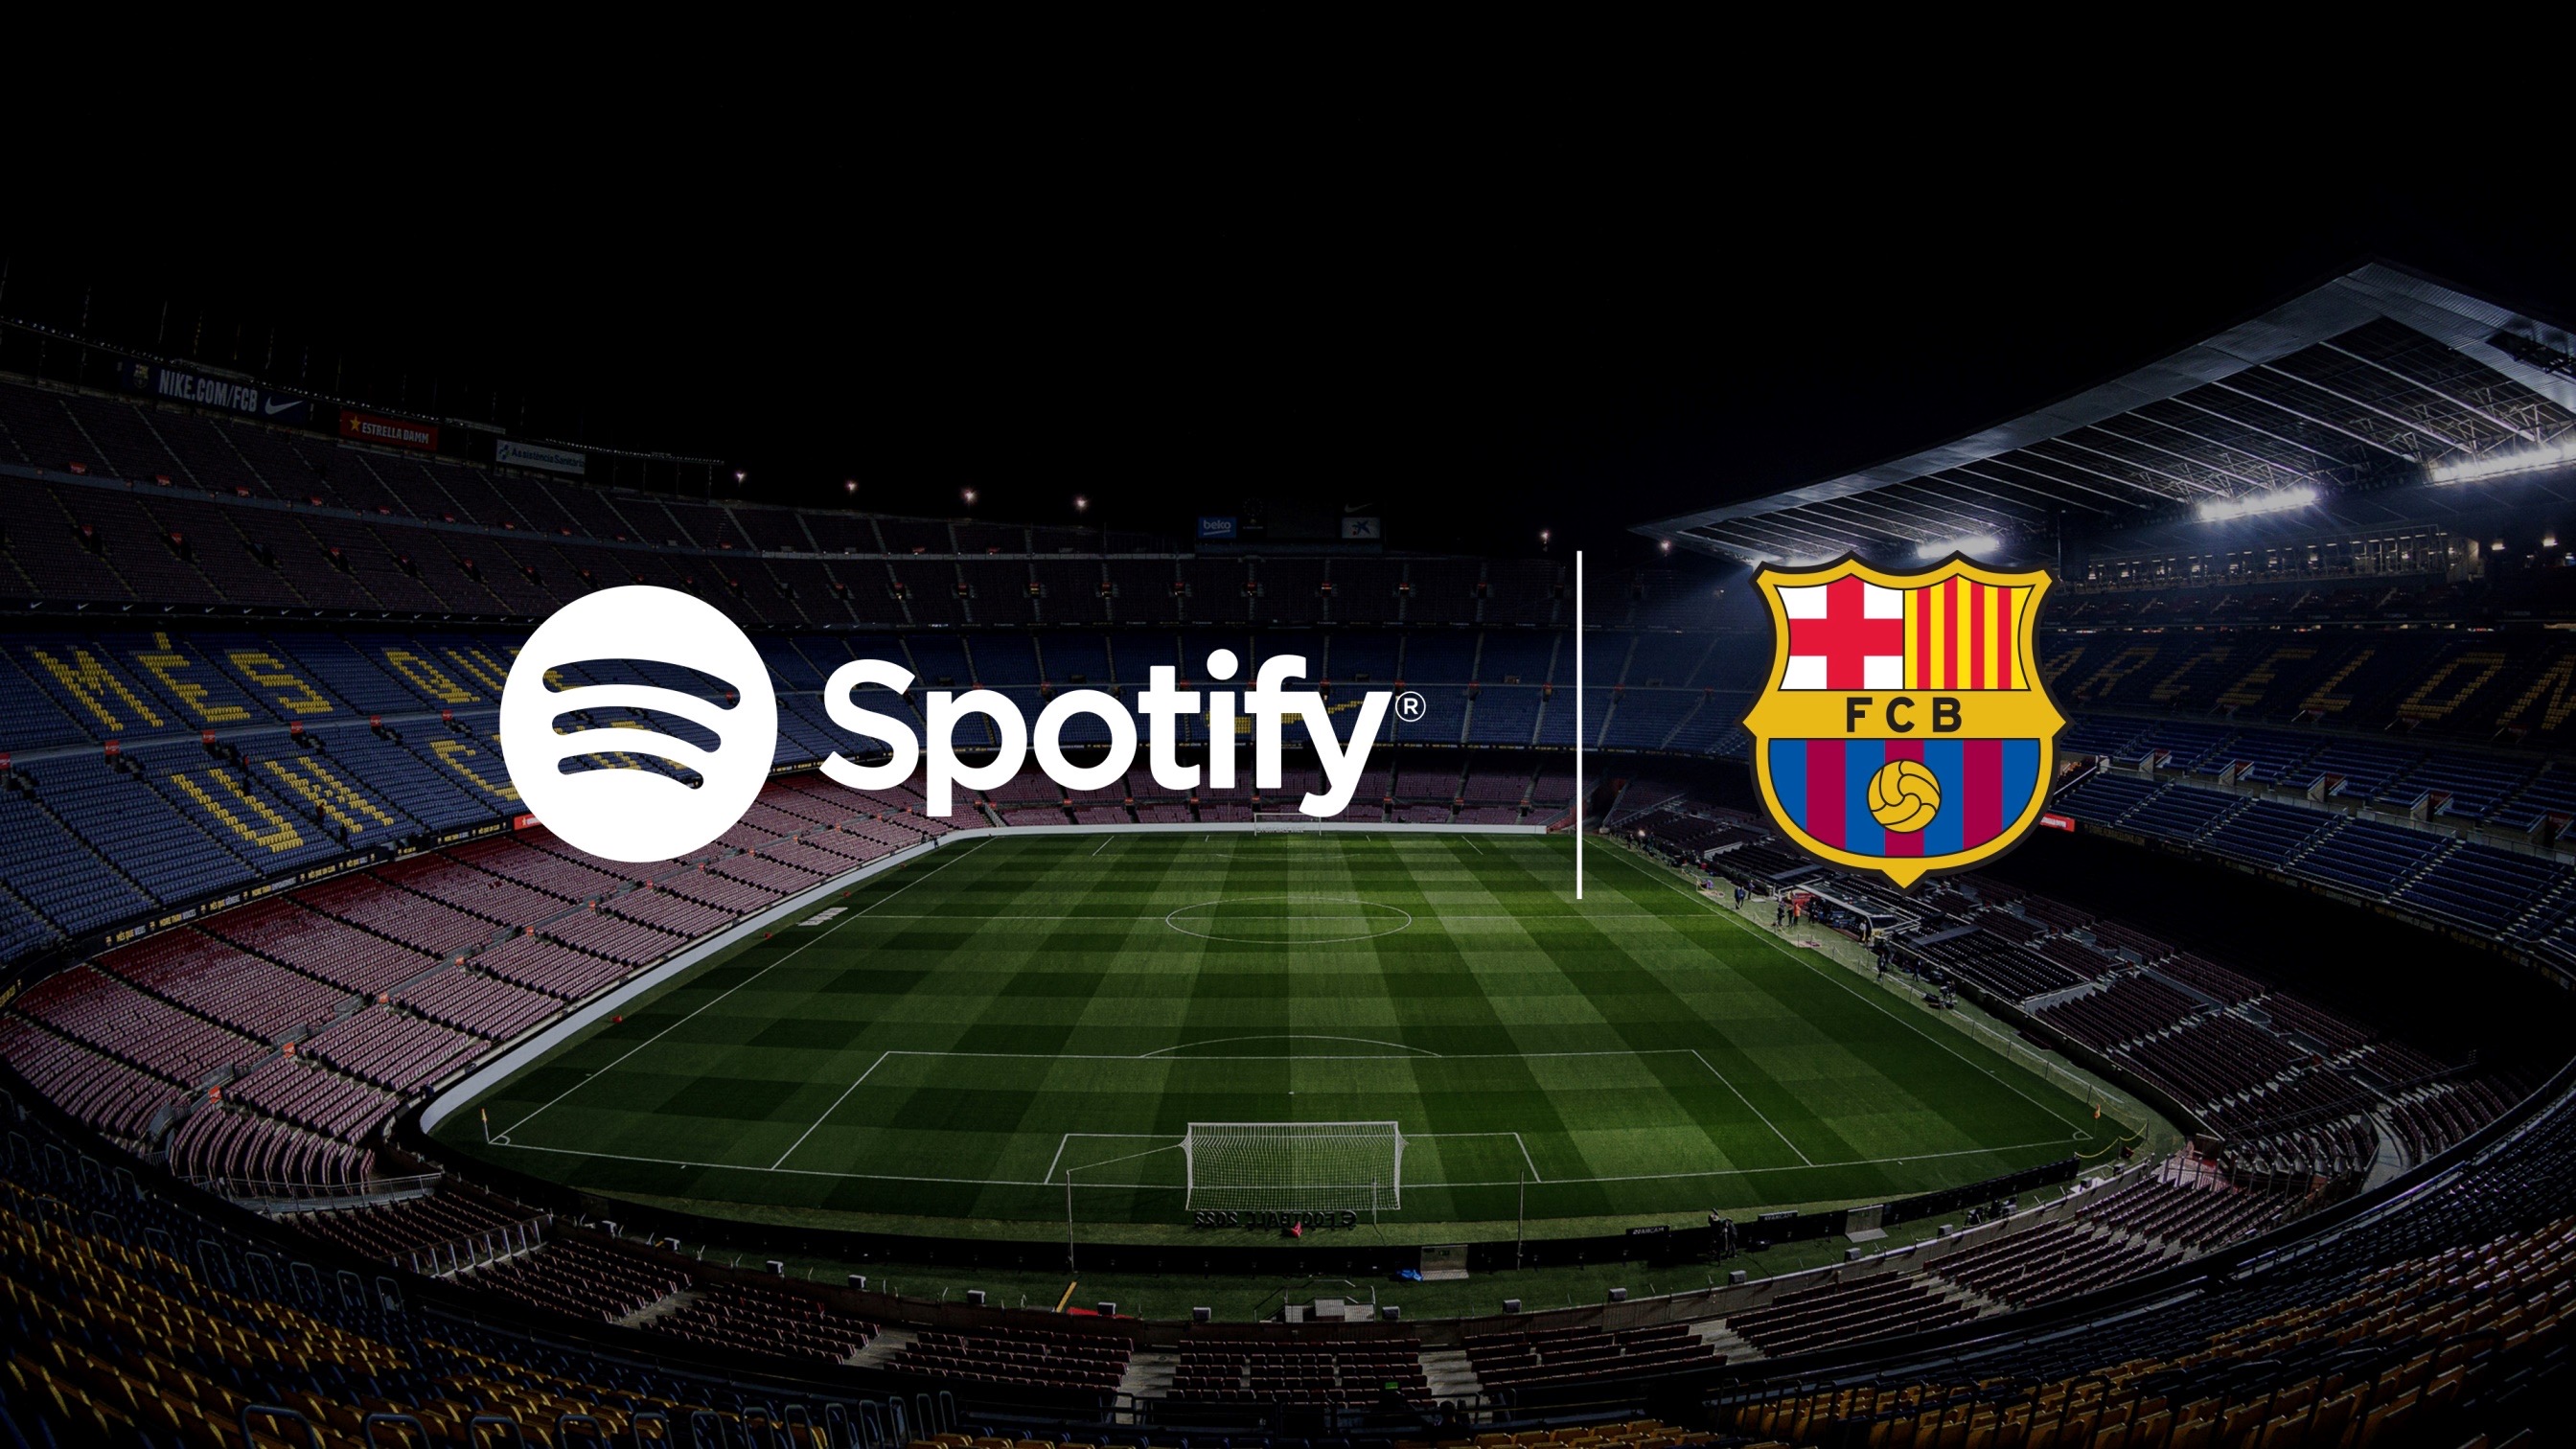 Spotify ประกาศพันธมิตรระยะยาวเชิงกลยุทธ์ด้านกีฬาและความบันเทิงกับ FC Barcelona